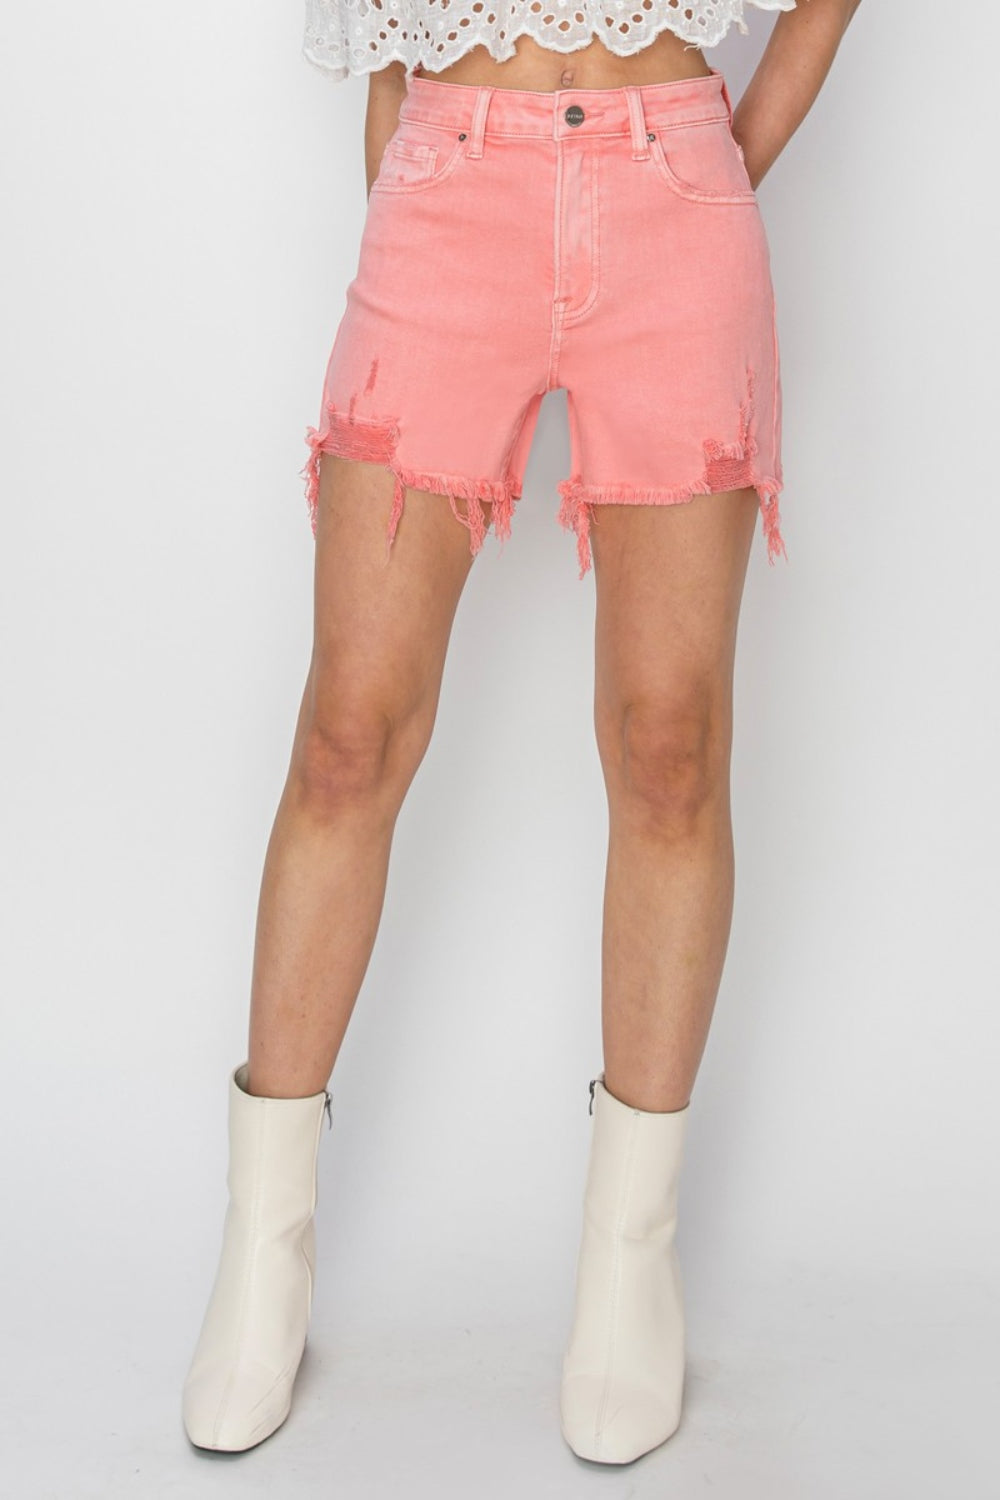 Flamingo Distressed Denim Shorts - Cheeky Chic Boutique